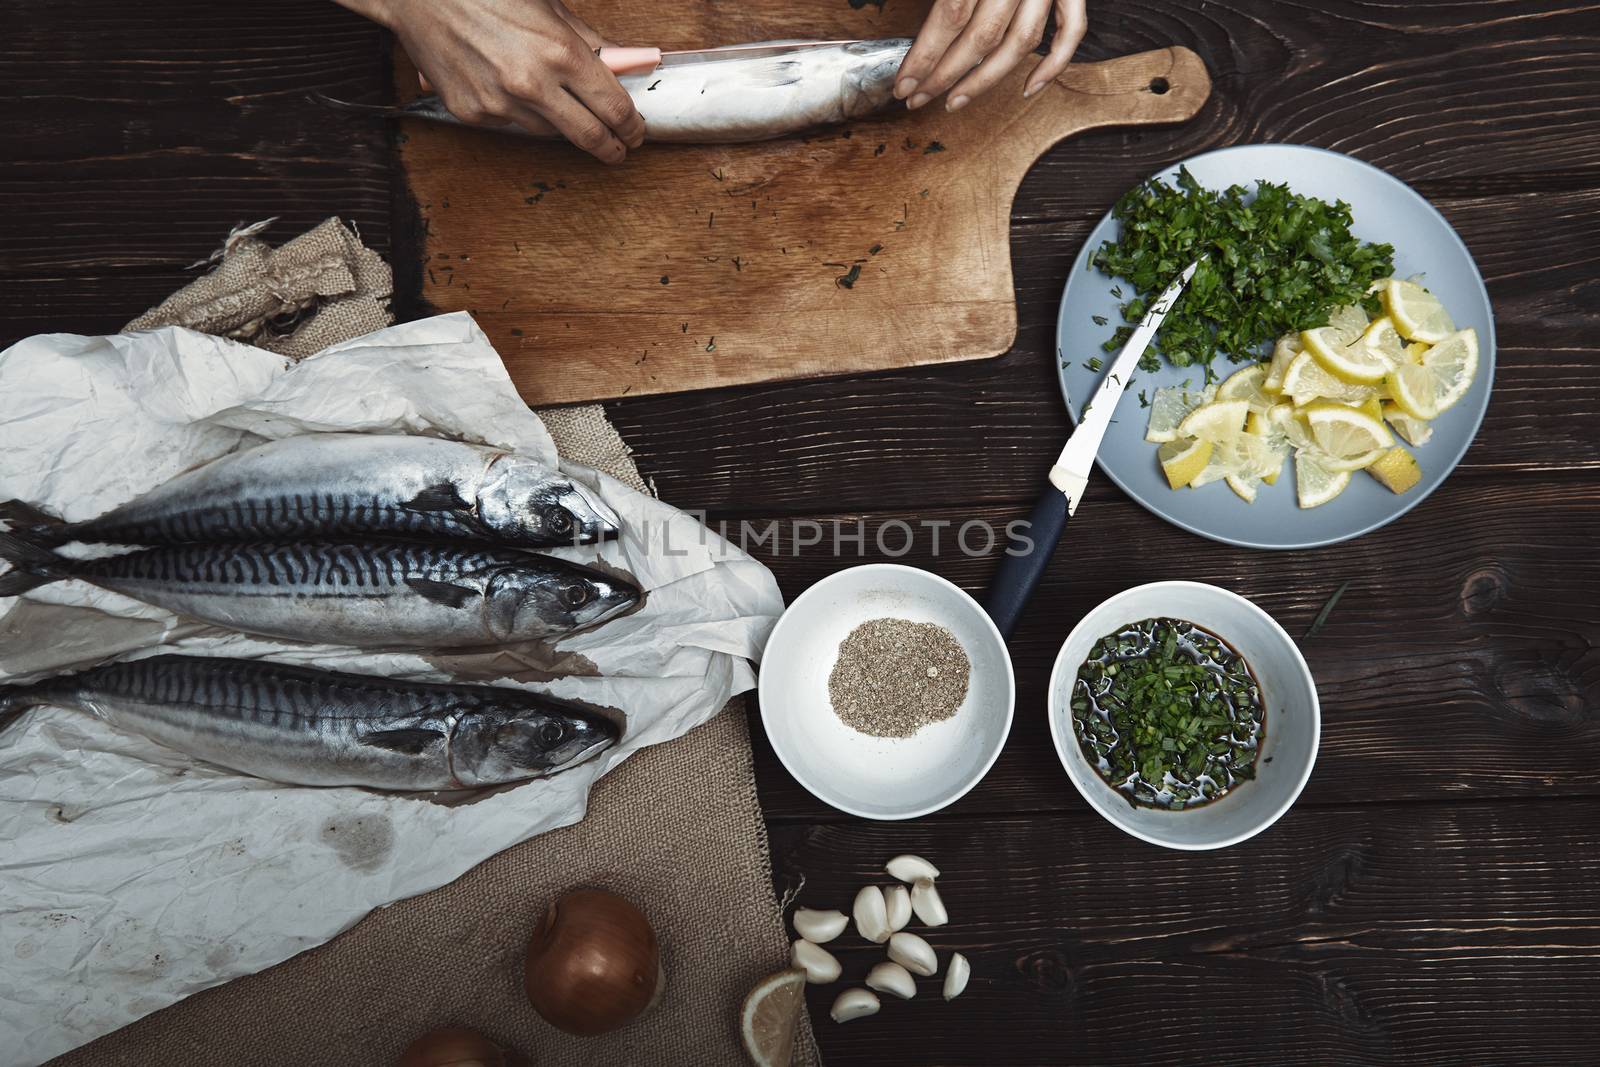 Woman preparing mackerel fish by Novic